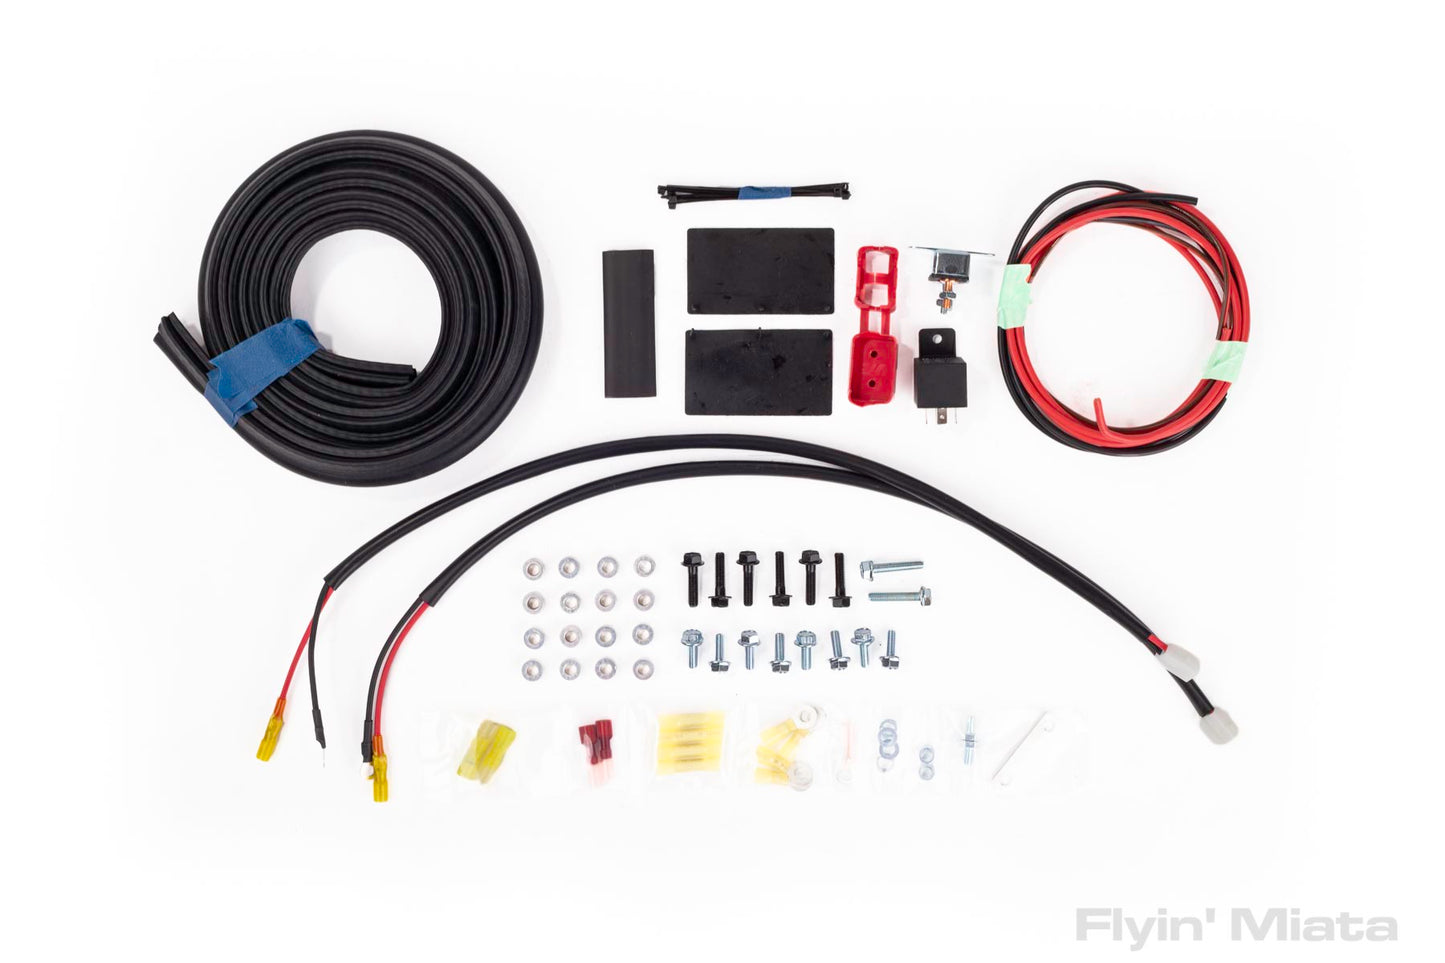 Stage 1 Flyin Miata airflow kit for upright radiator (NA6)